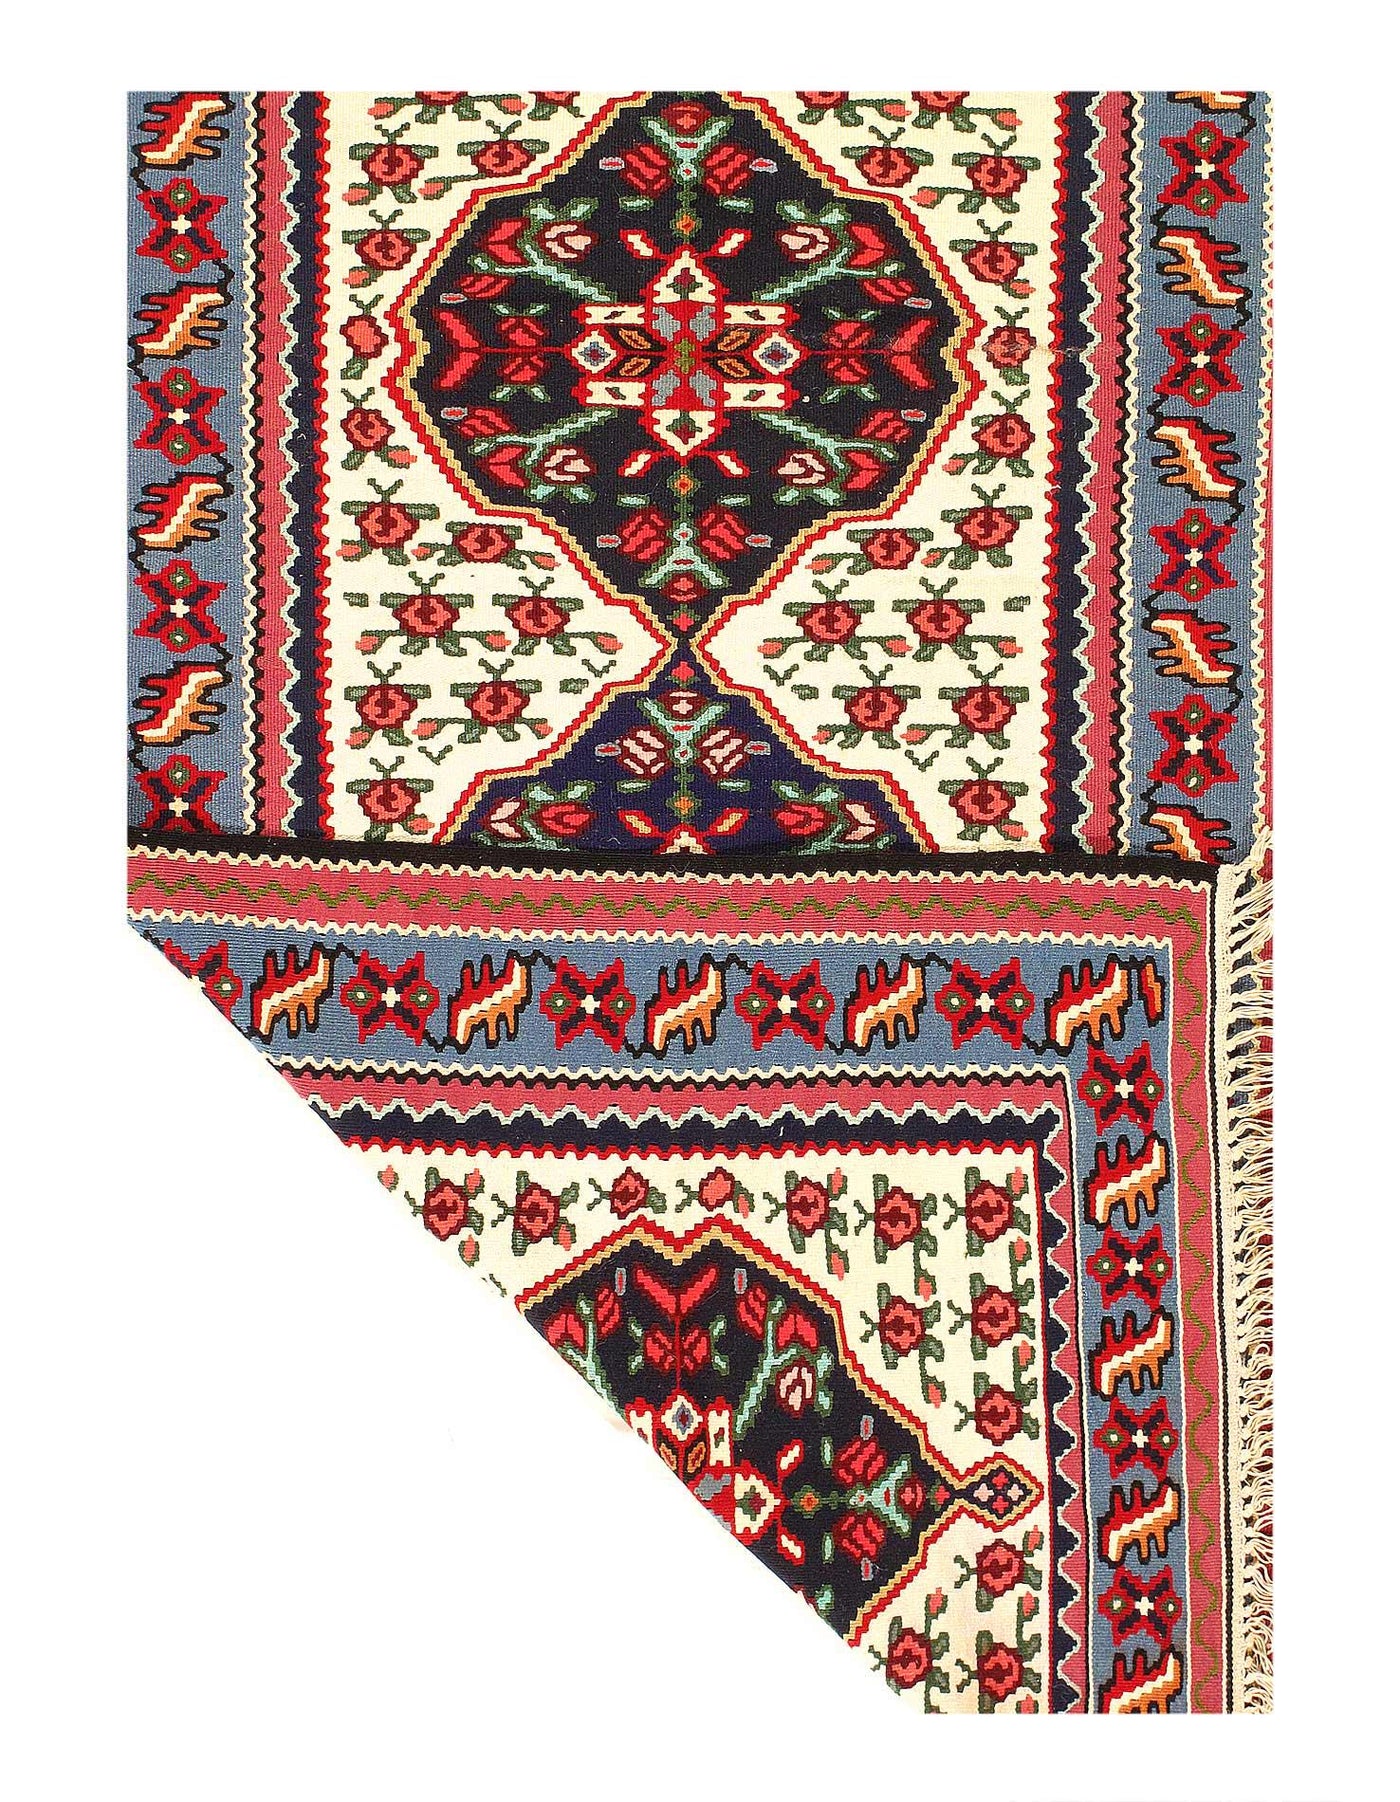 Fine vintage Persian Flat Weave kilim - 3'5'' X 5'11''